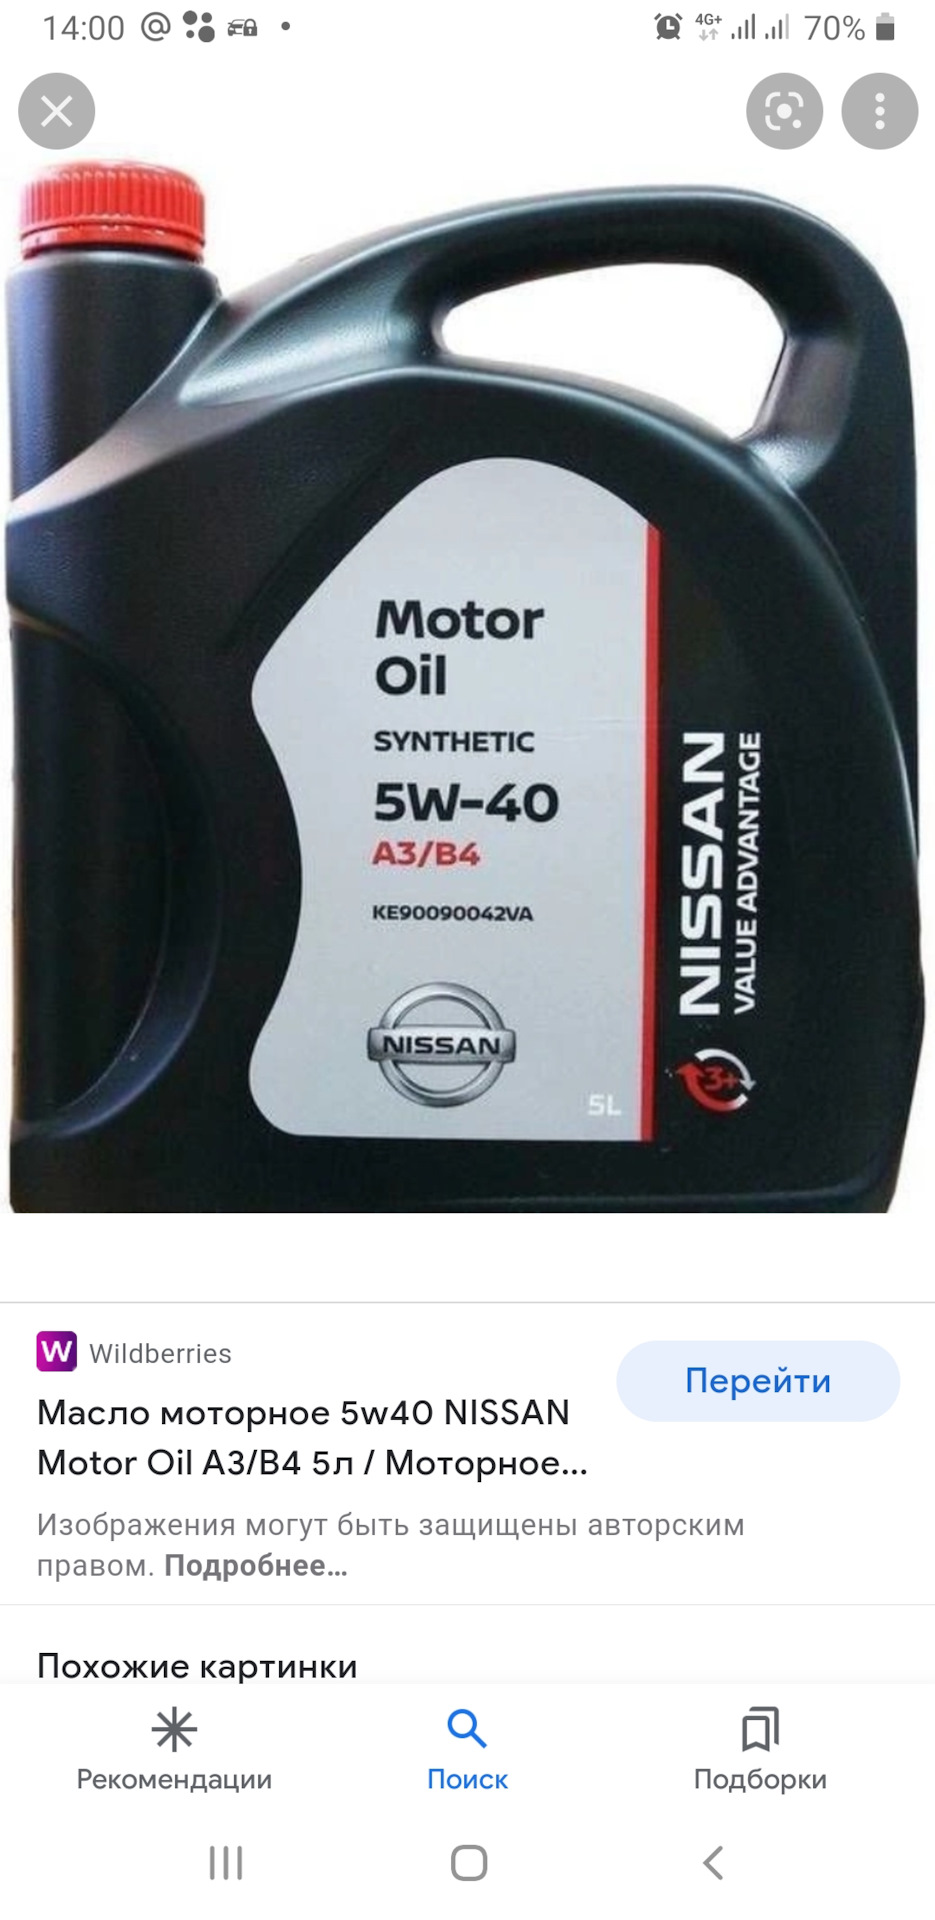 Моторные масла ниссан 5w40 цена. Nissan Motor Oil 5w40. Nissan Motor Oil 5w-40, 5л. Nissan 5-40. Ниссан 5w40 синтетика.